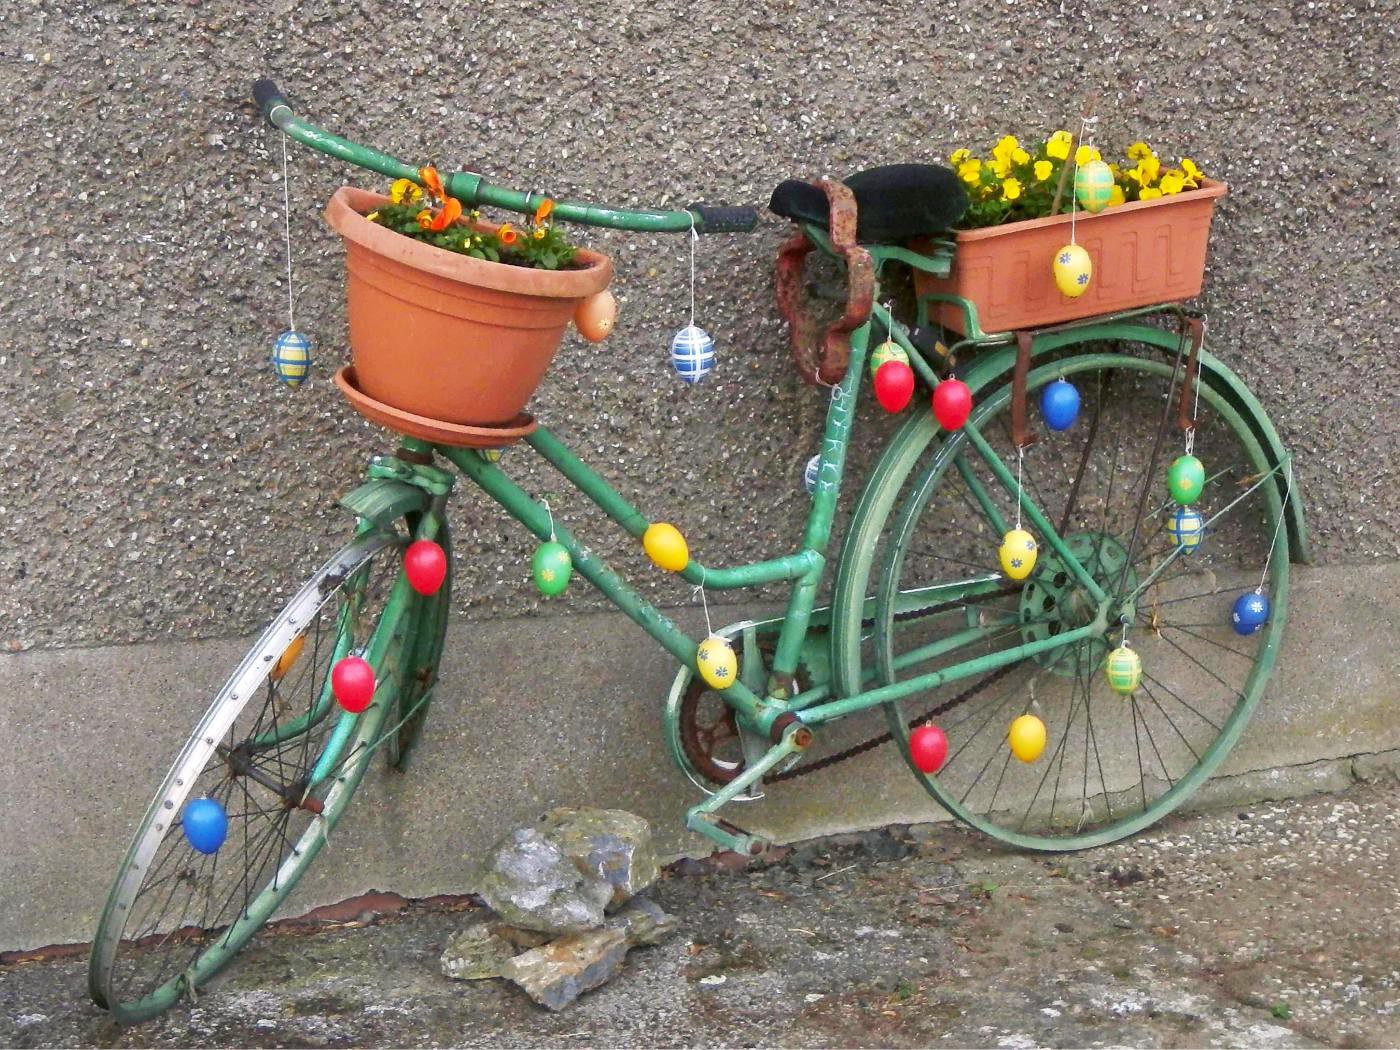 Fahrrad des Osterhasen?